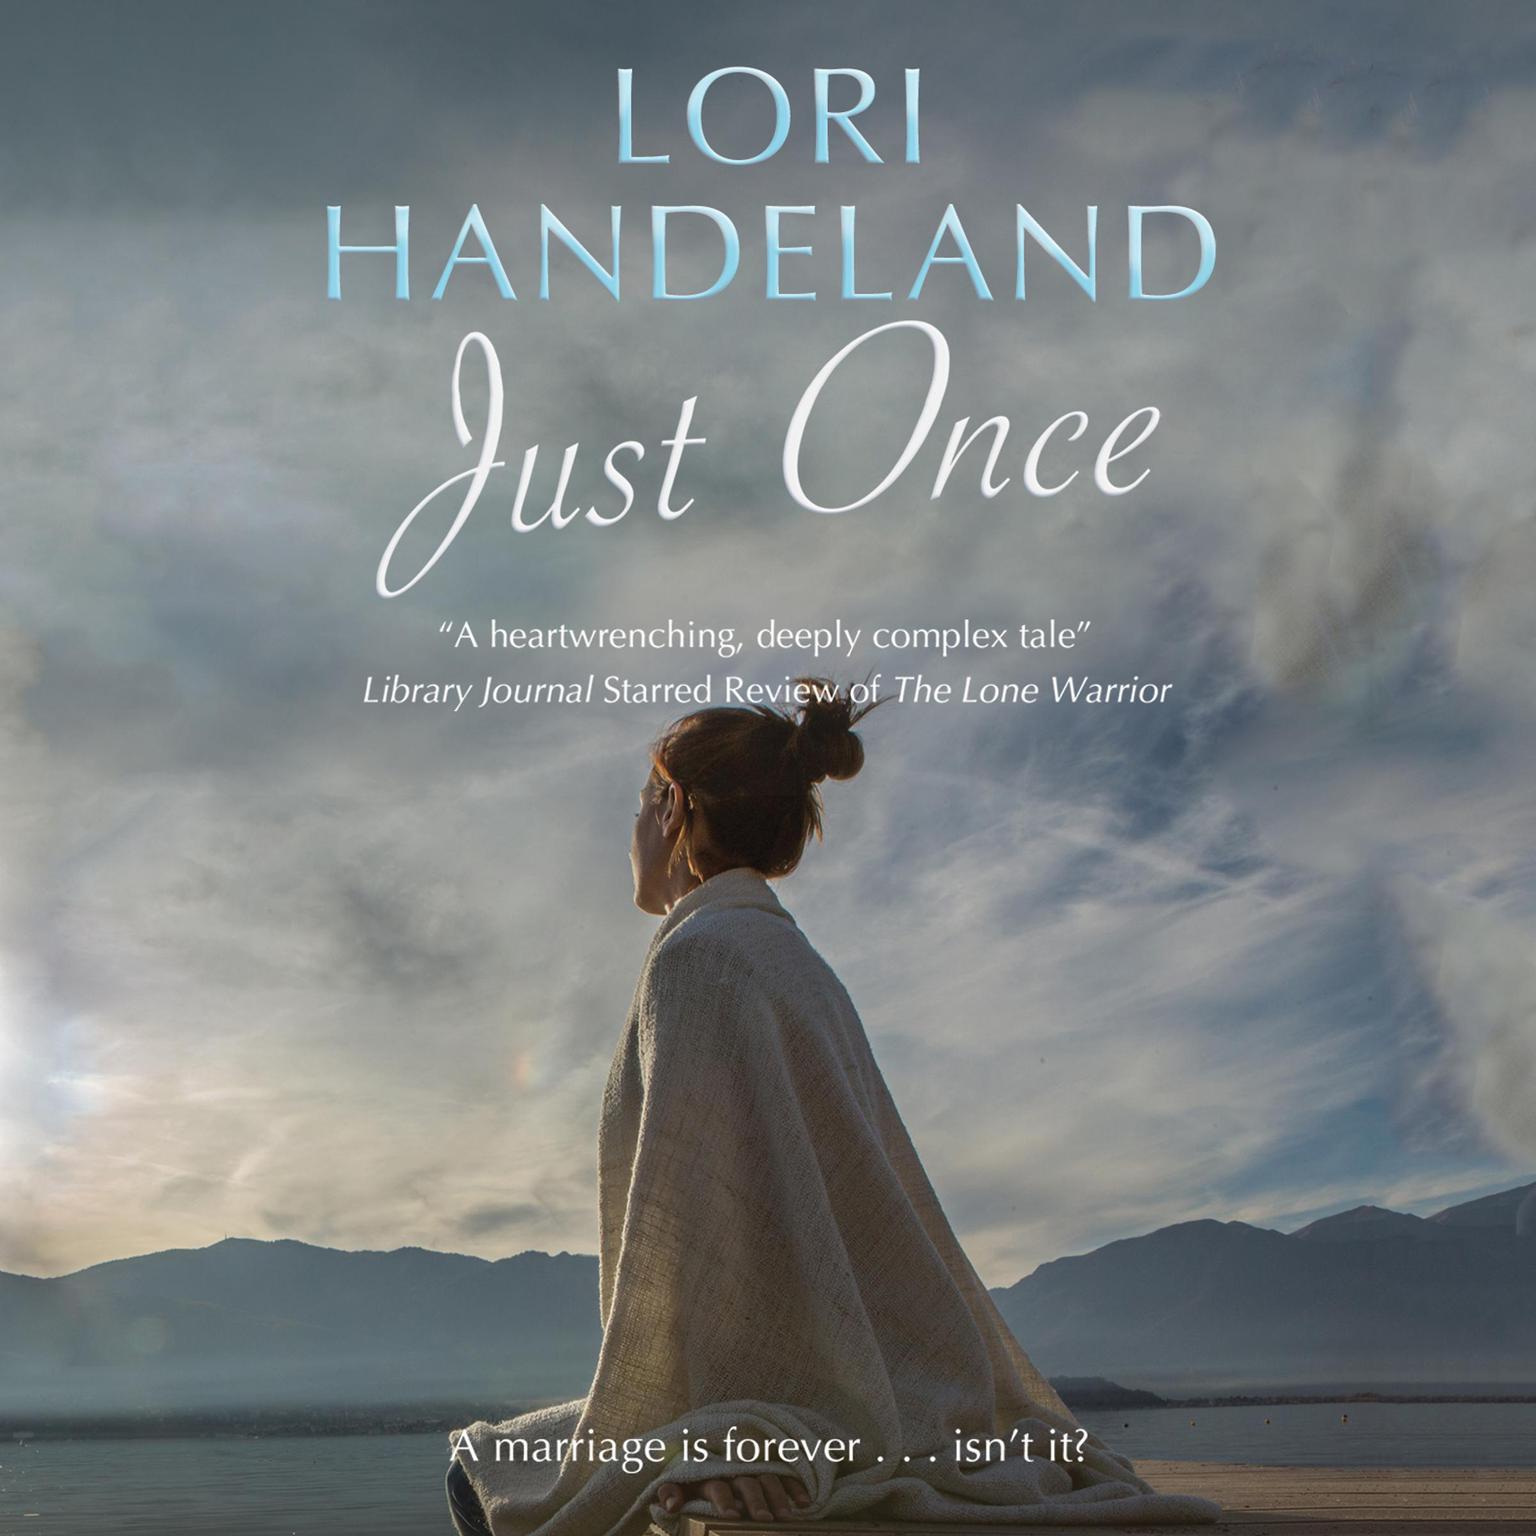 Just Once Audiobook, by Lori Handeland